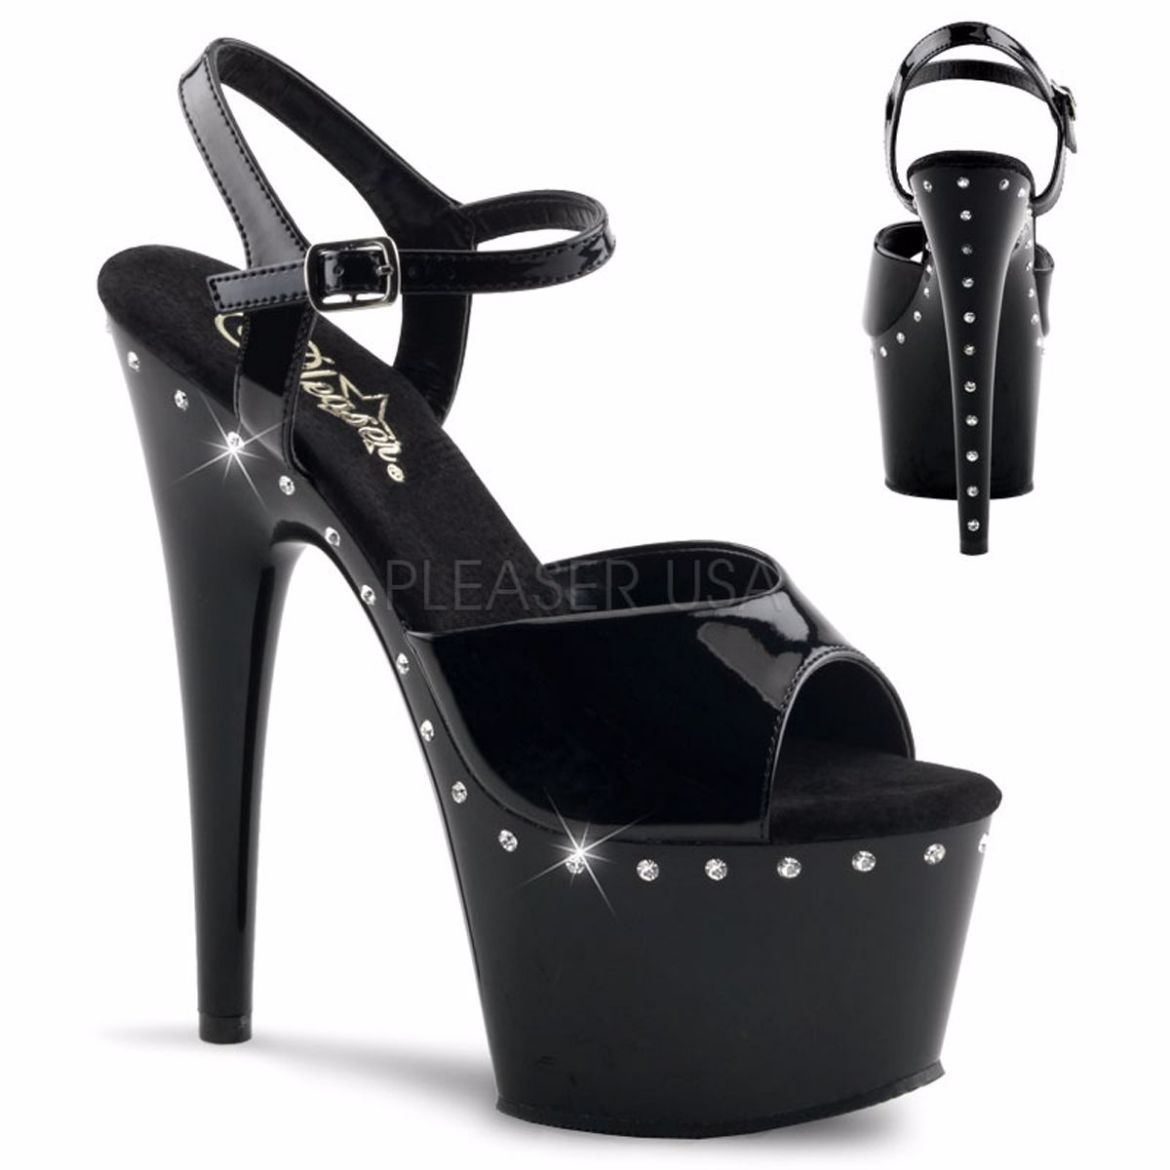 Product image of Pleaser Adore-709Ls Black/Black, 7 inch (17.8 cm) Heel, 2 3/4 inch (7 cm) Platform Sandal Shoes